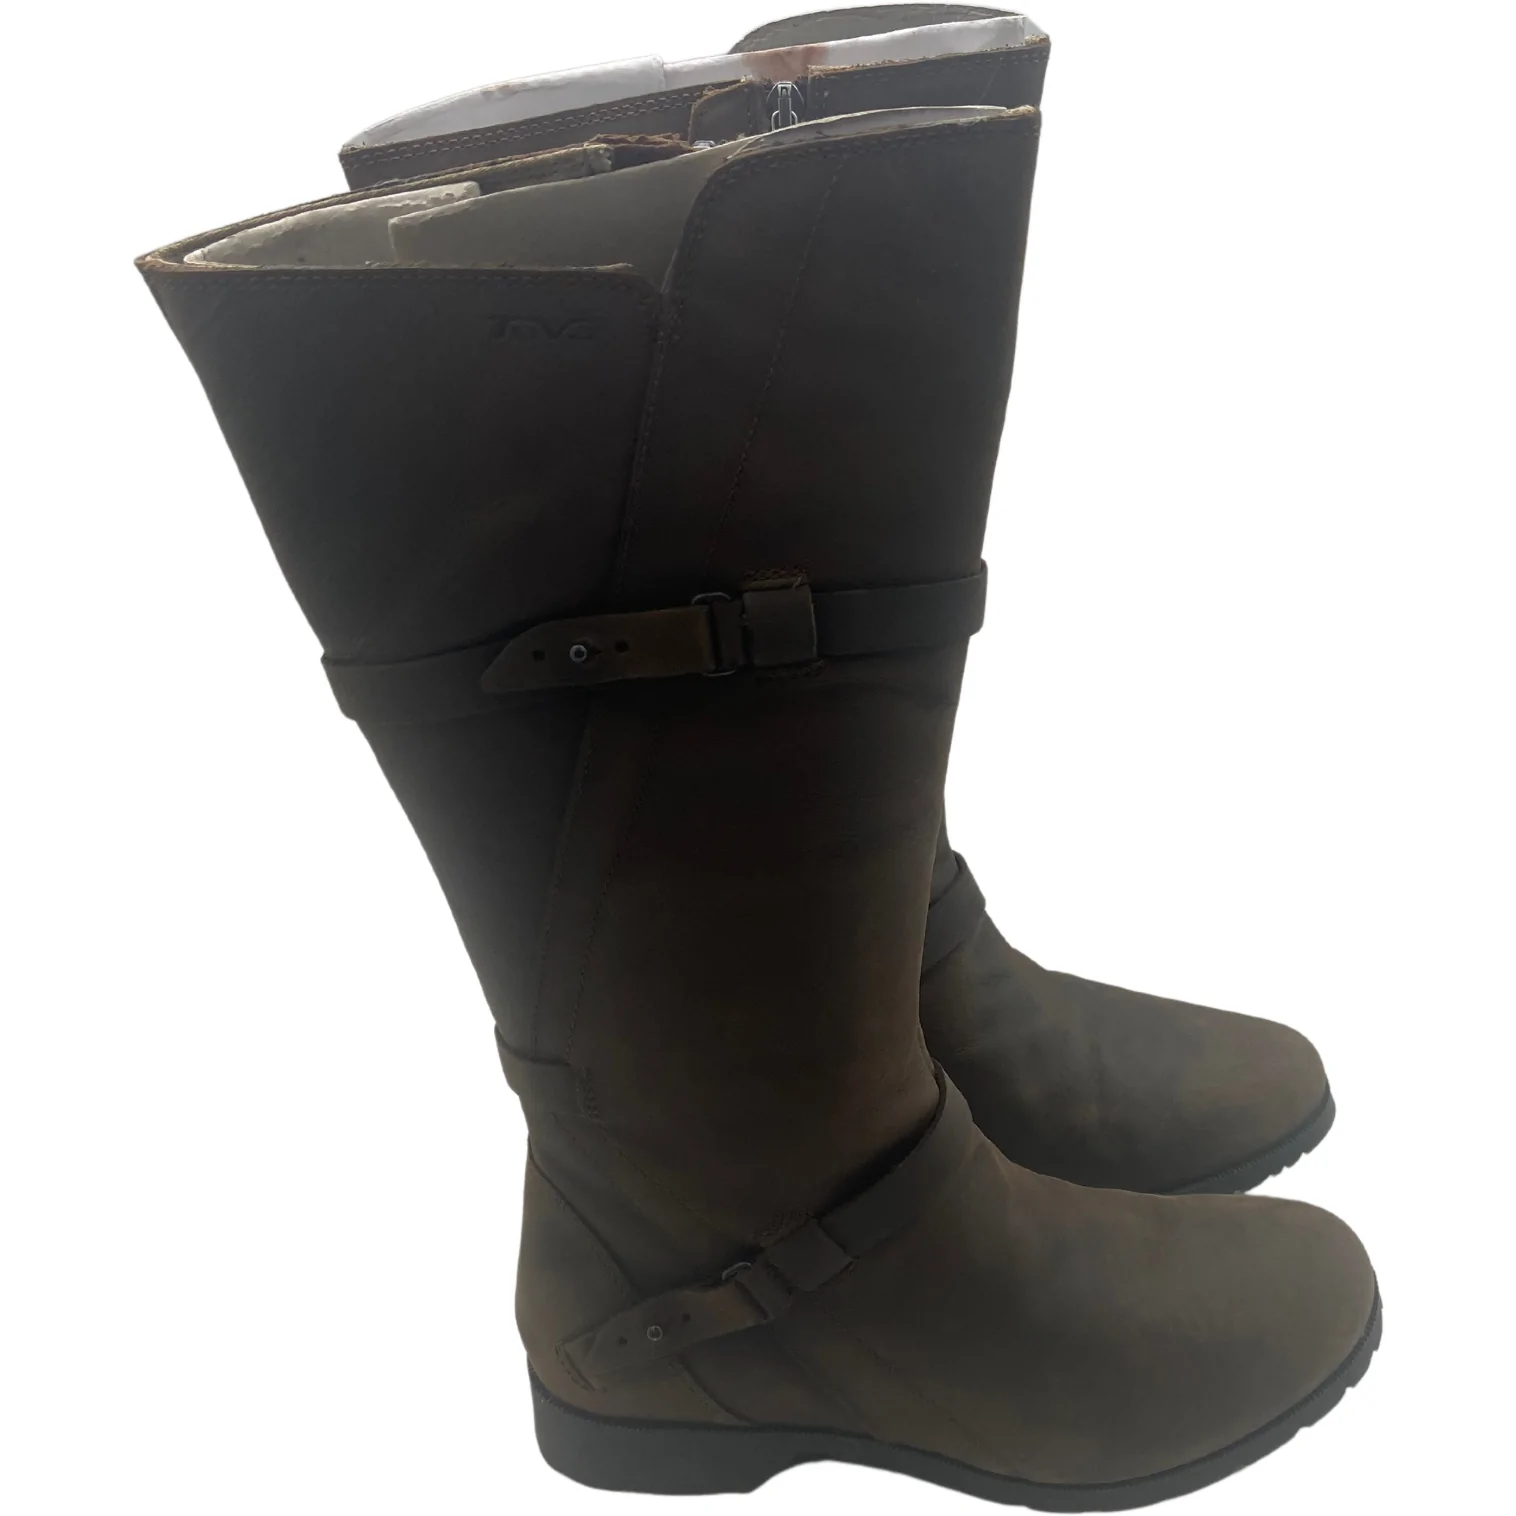 Teva: Womens Boots / Knee High / Delavina / Waterproof / Leather / Brown / Size 7.5